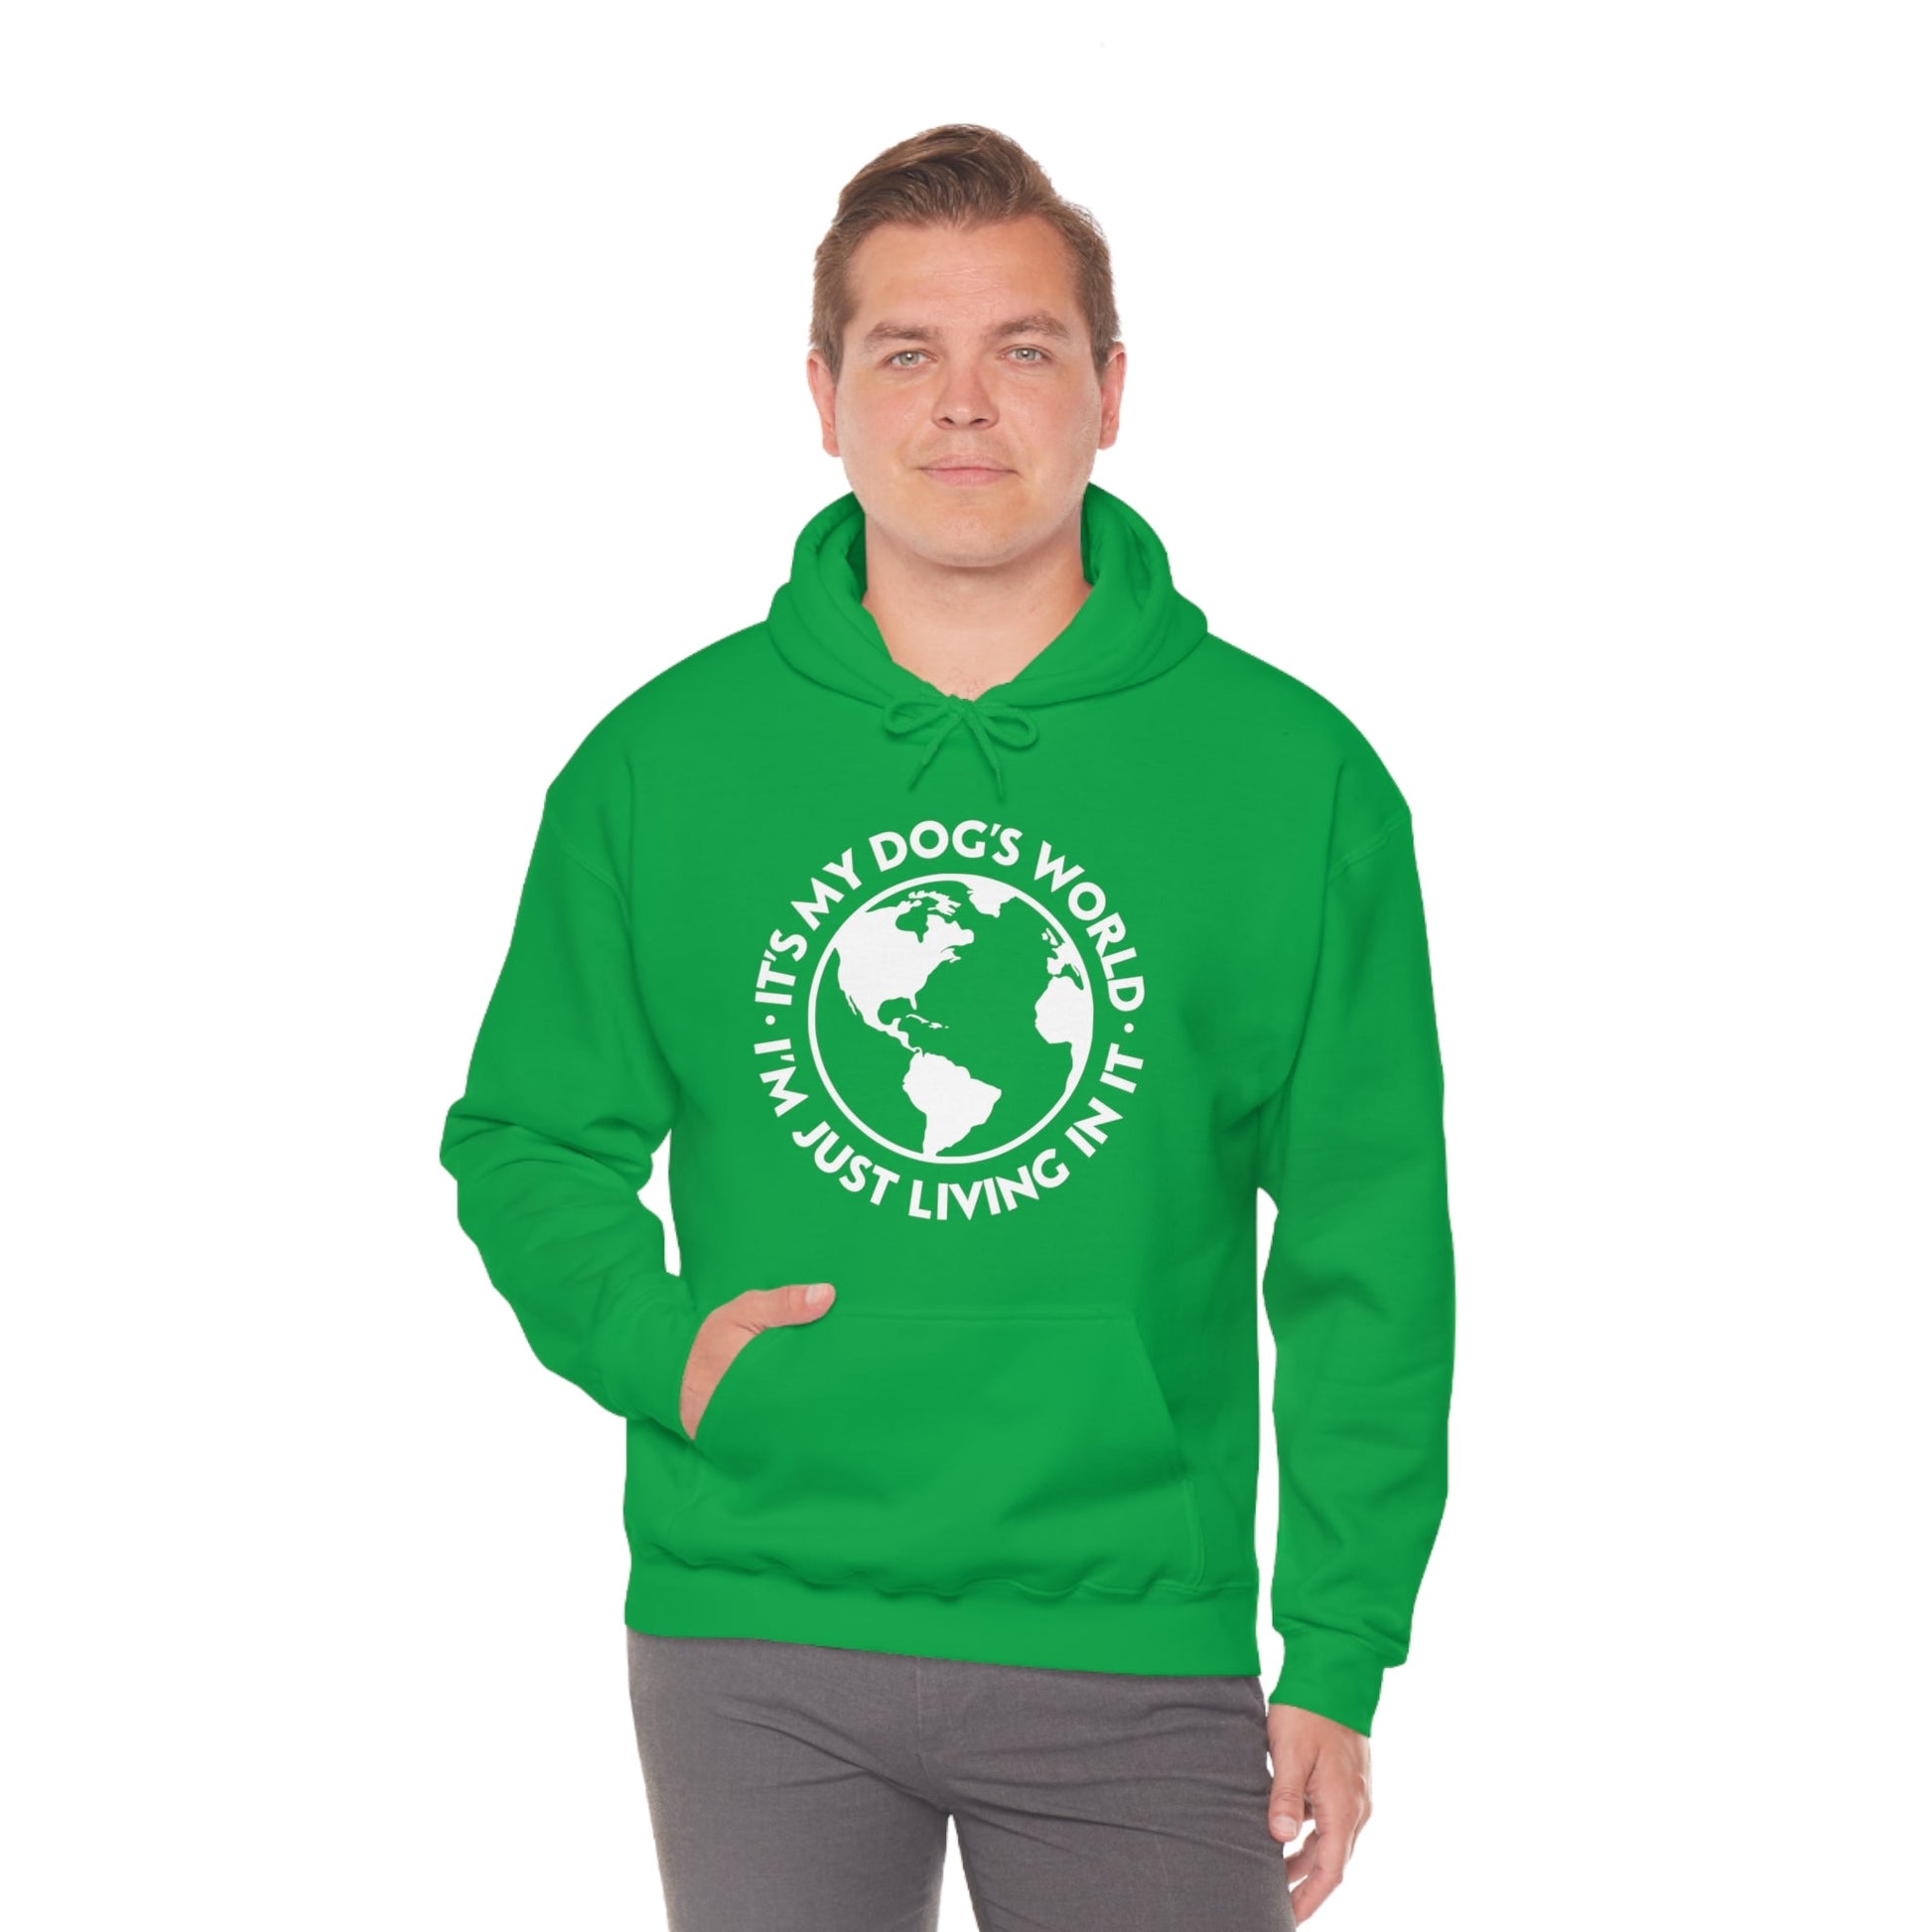 It's My Dog's World | Hooded Sweatshirt - Detezi Designs-25790424223539111823